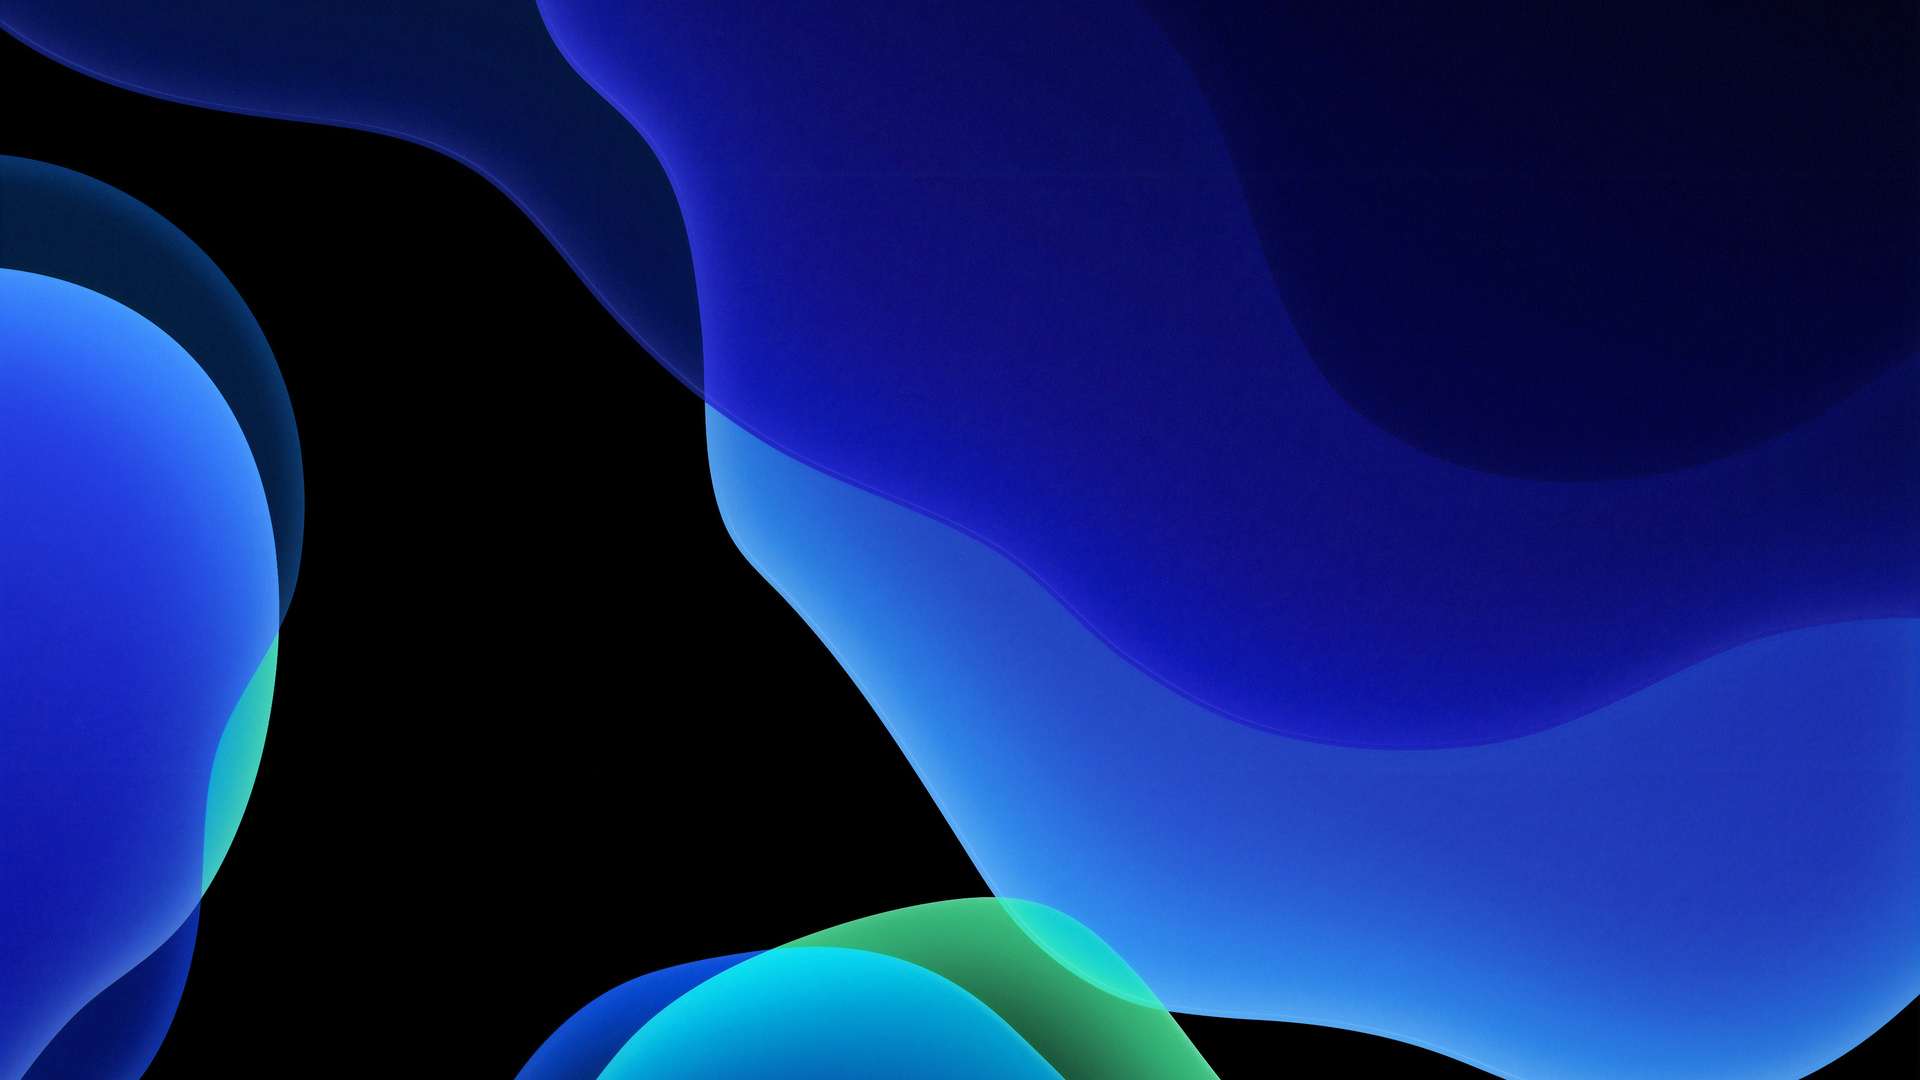 Blue Dark Abstract KDE Plasma DESKTOP WALLPAPER - KDE Store